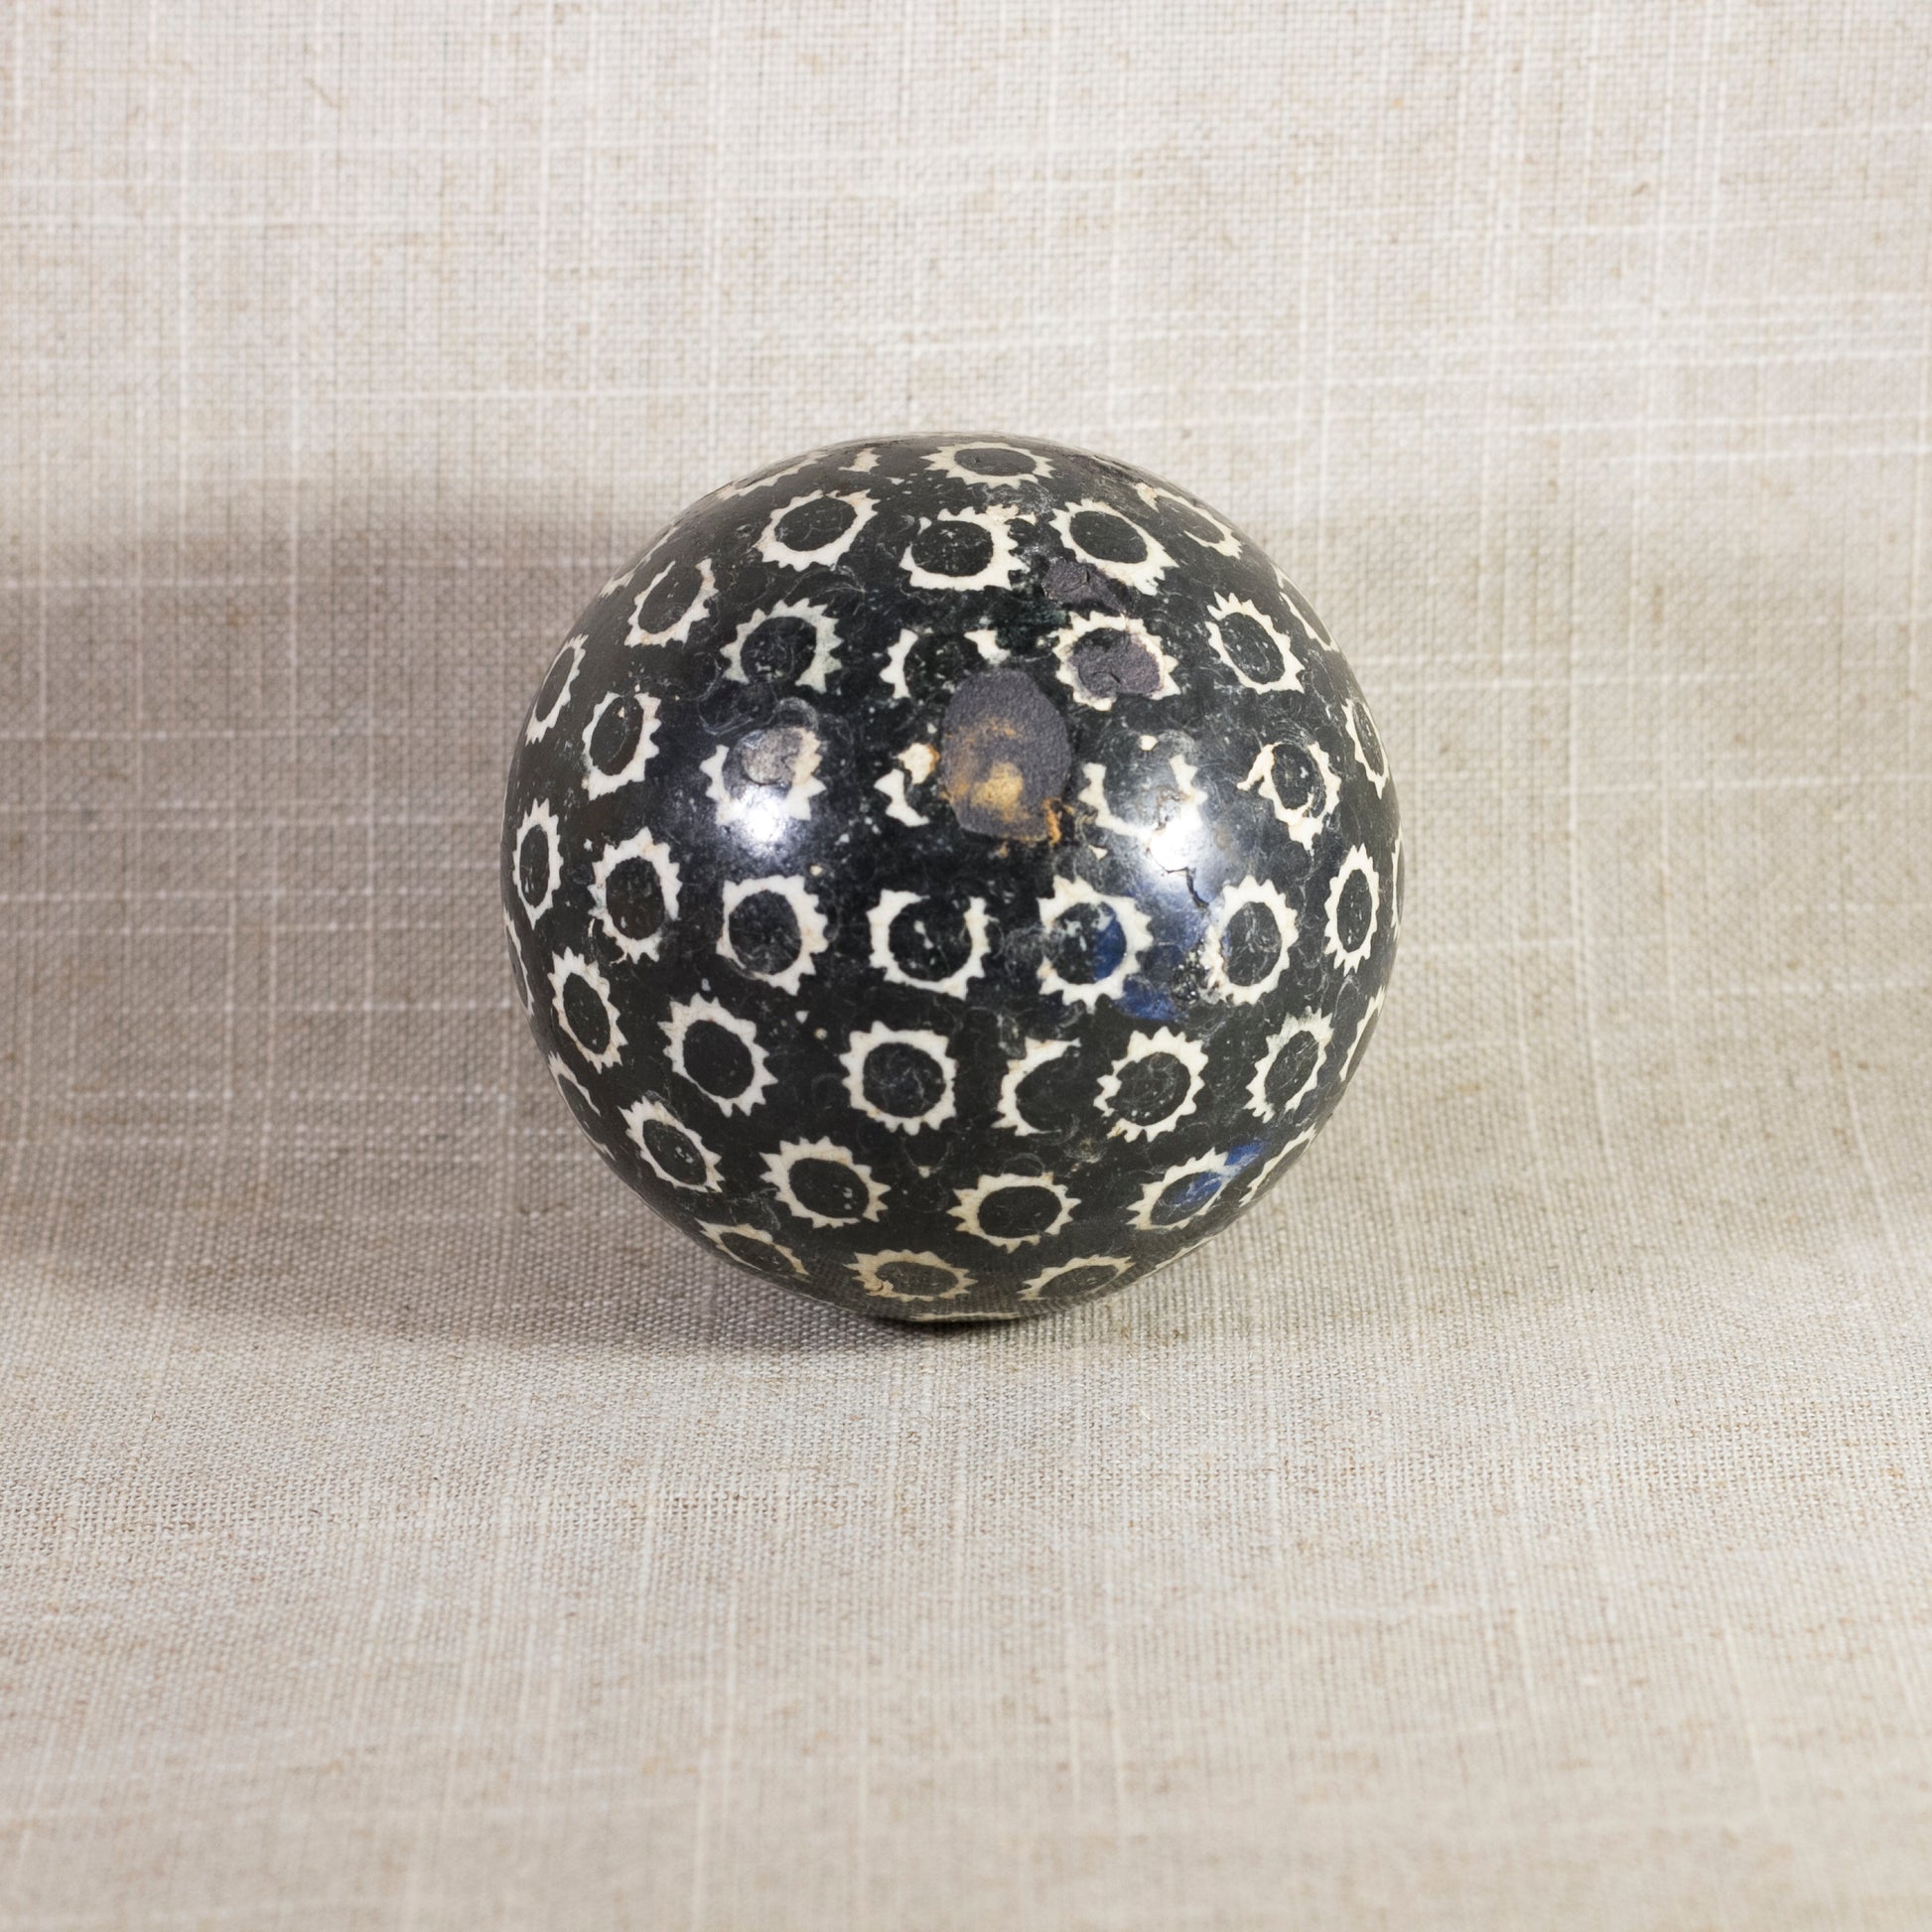 Antique VICTORIAN CARPET BALL with Black Stick-Spatter Star Design 3 ¼” Circa 1860 - 1890